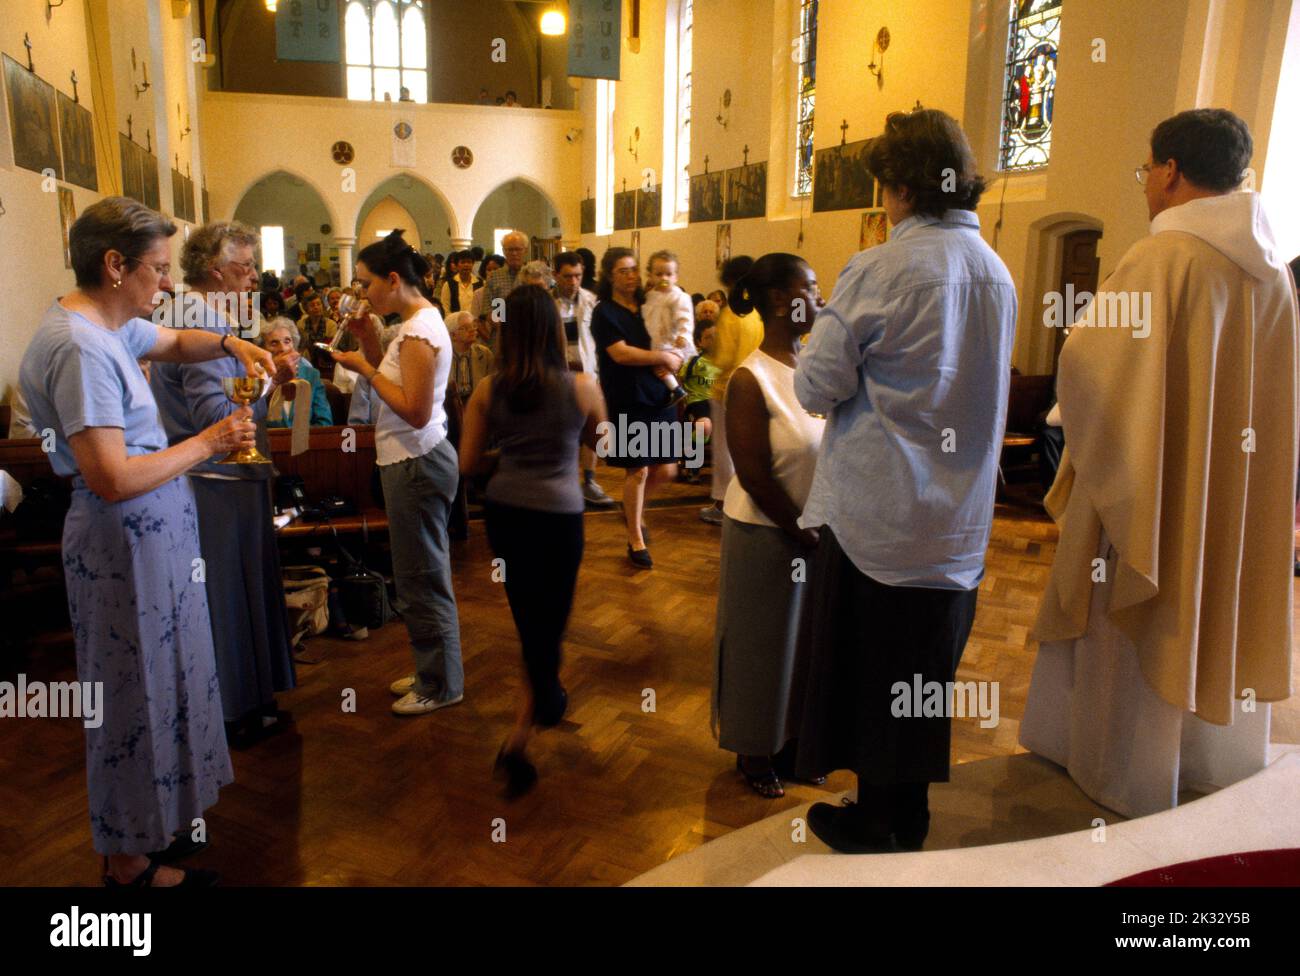 People Receiving the Sacramental Wine in Chalice at St Joseph's Church Roehampton London England Stock Photo